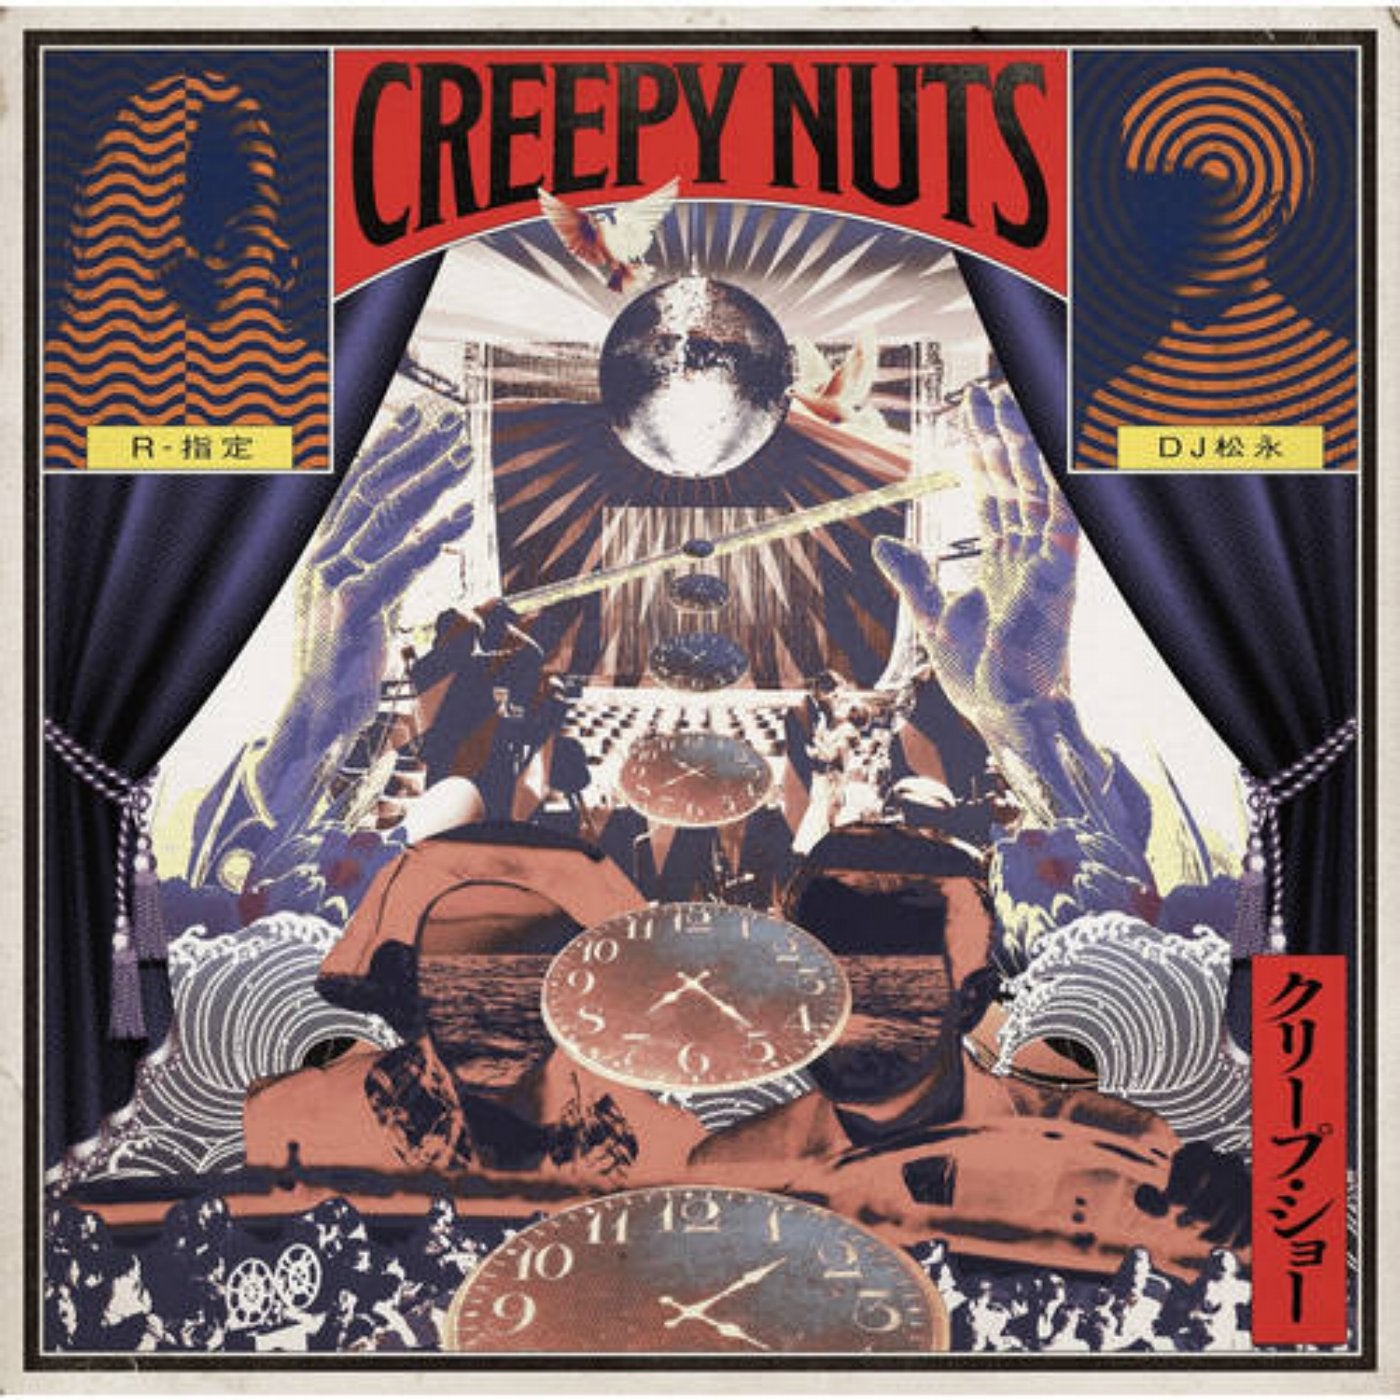 Creepy Nuts music download - Beatport